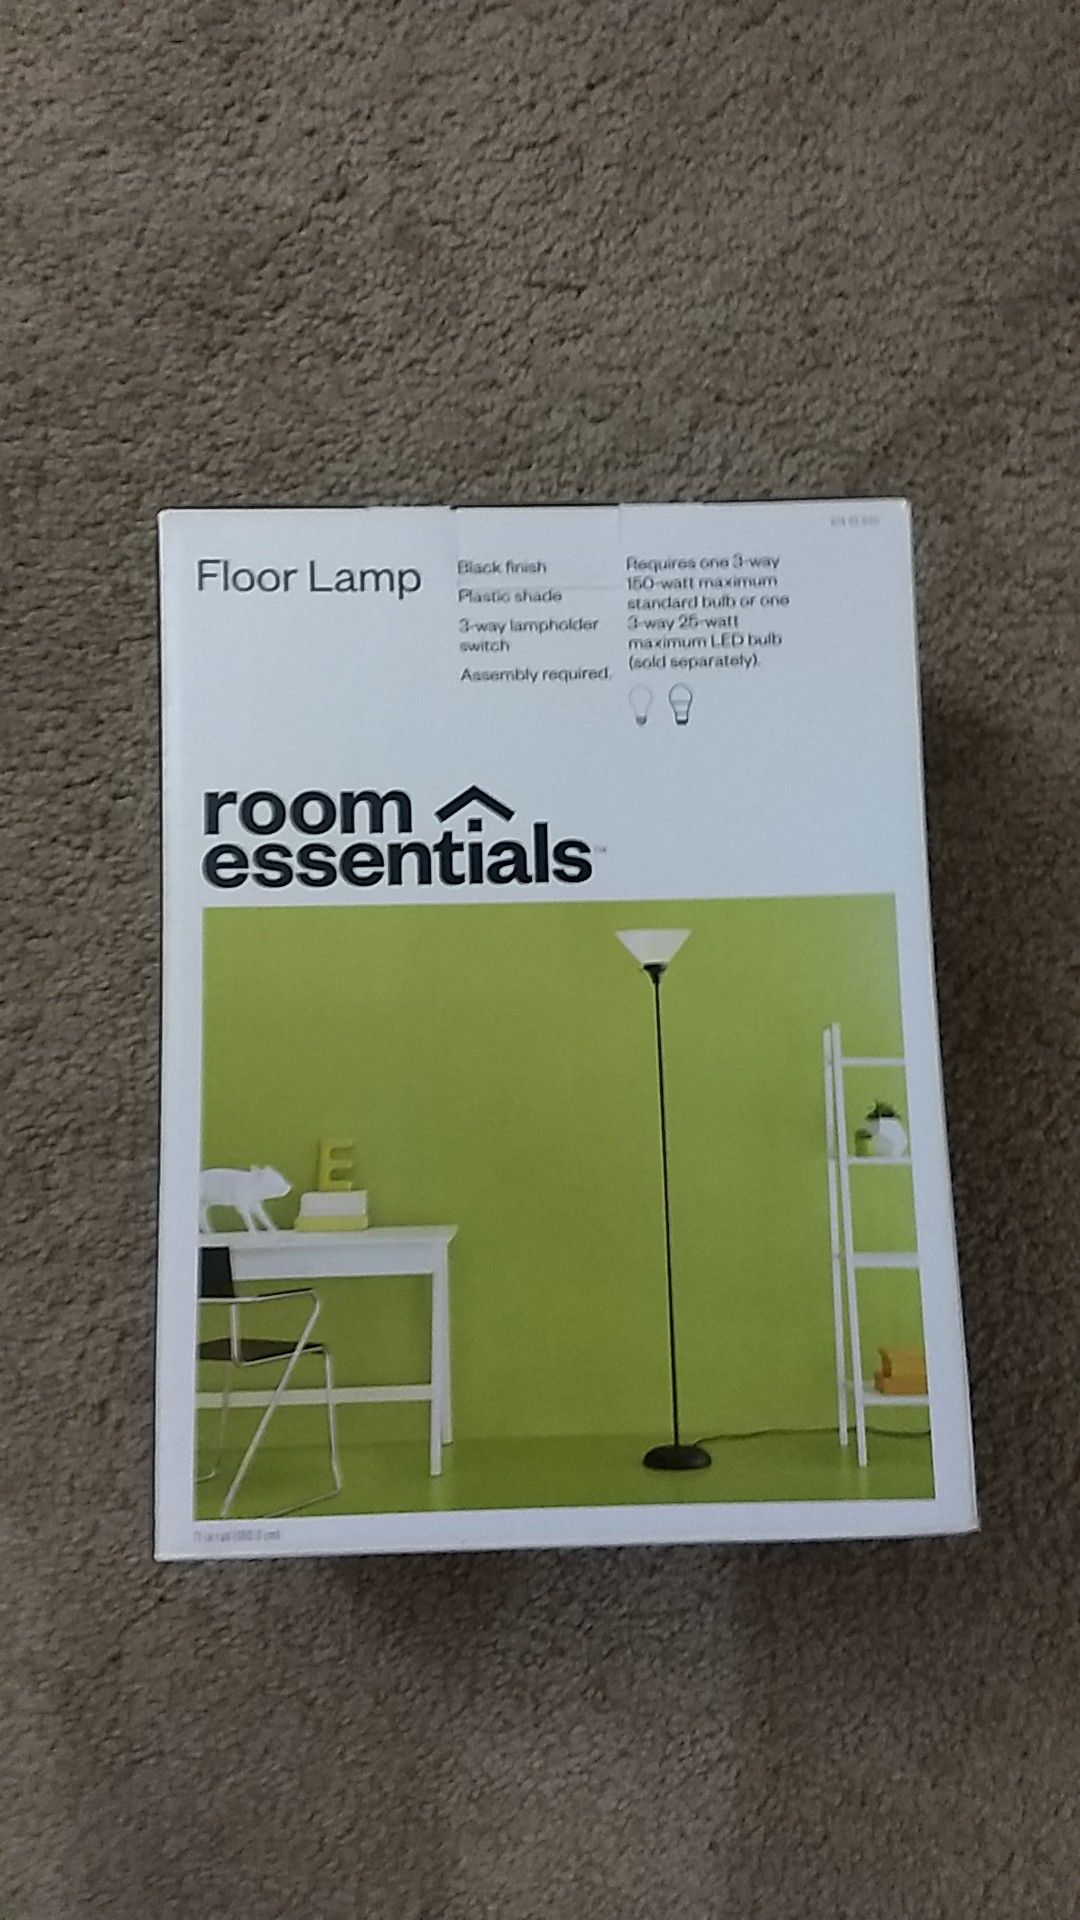 Floor lamp with light